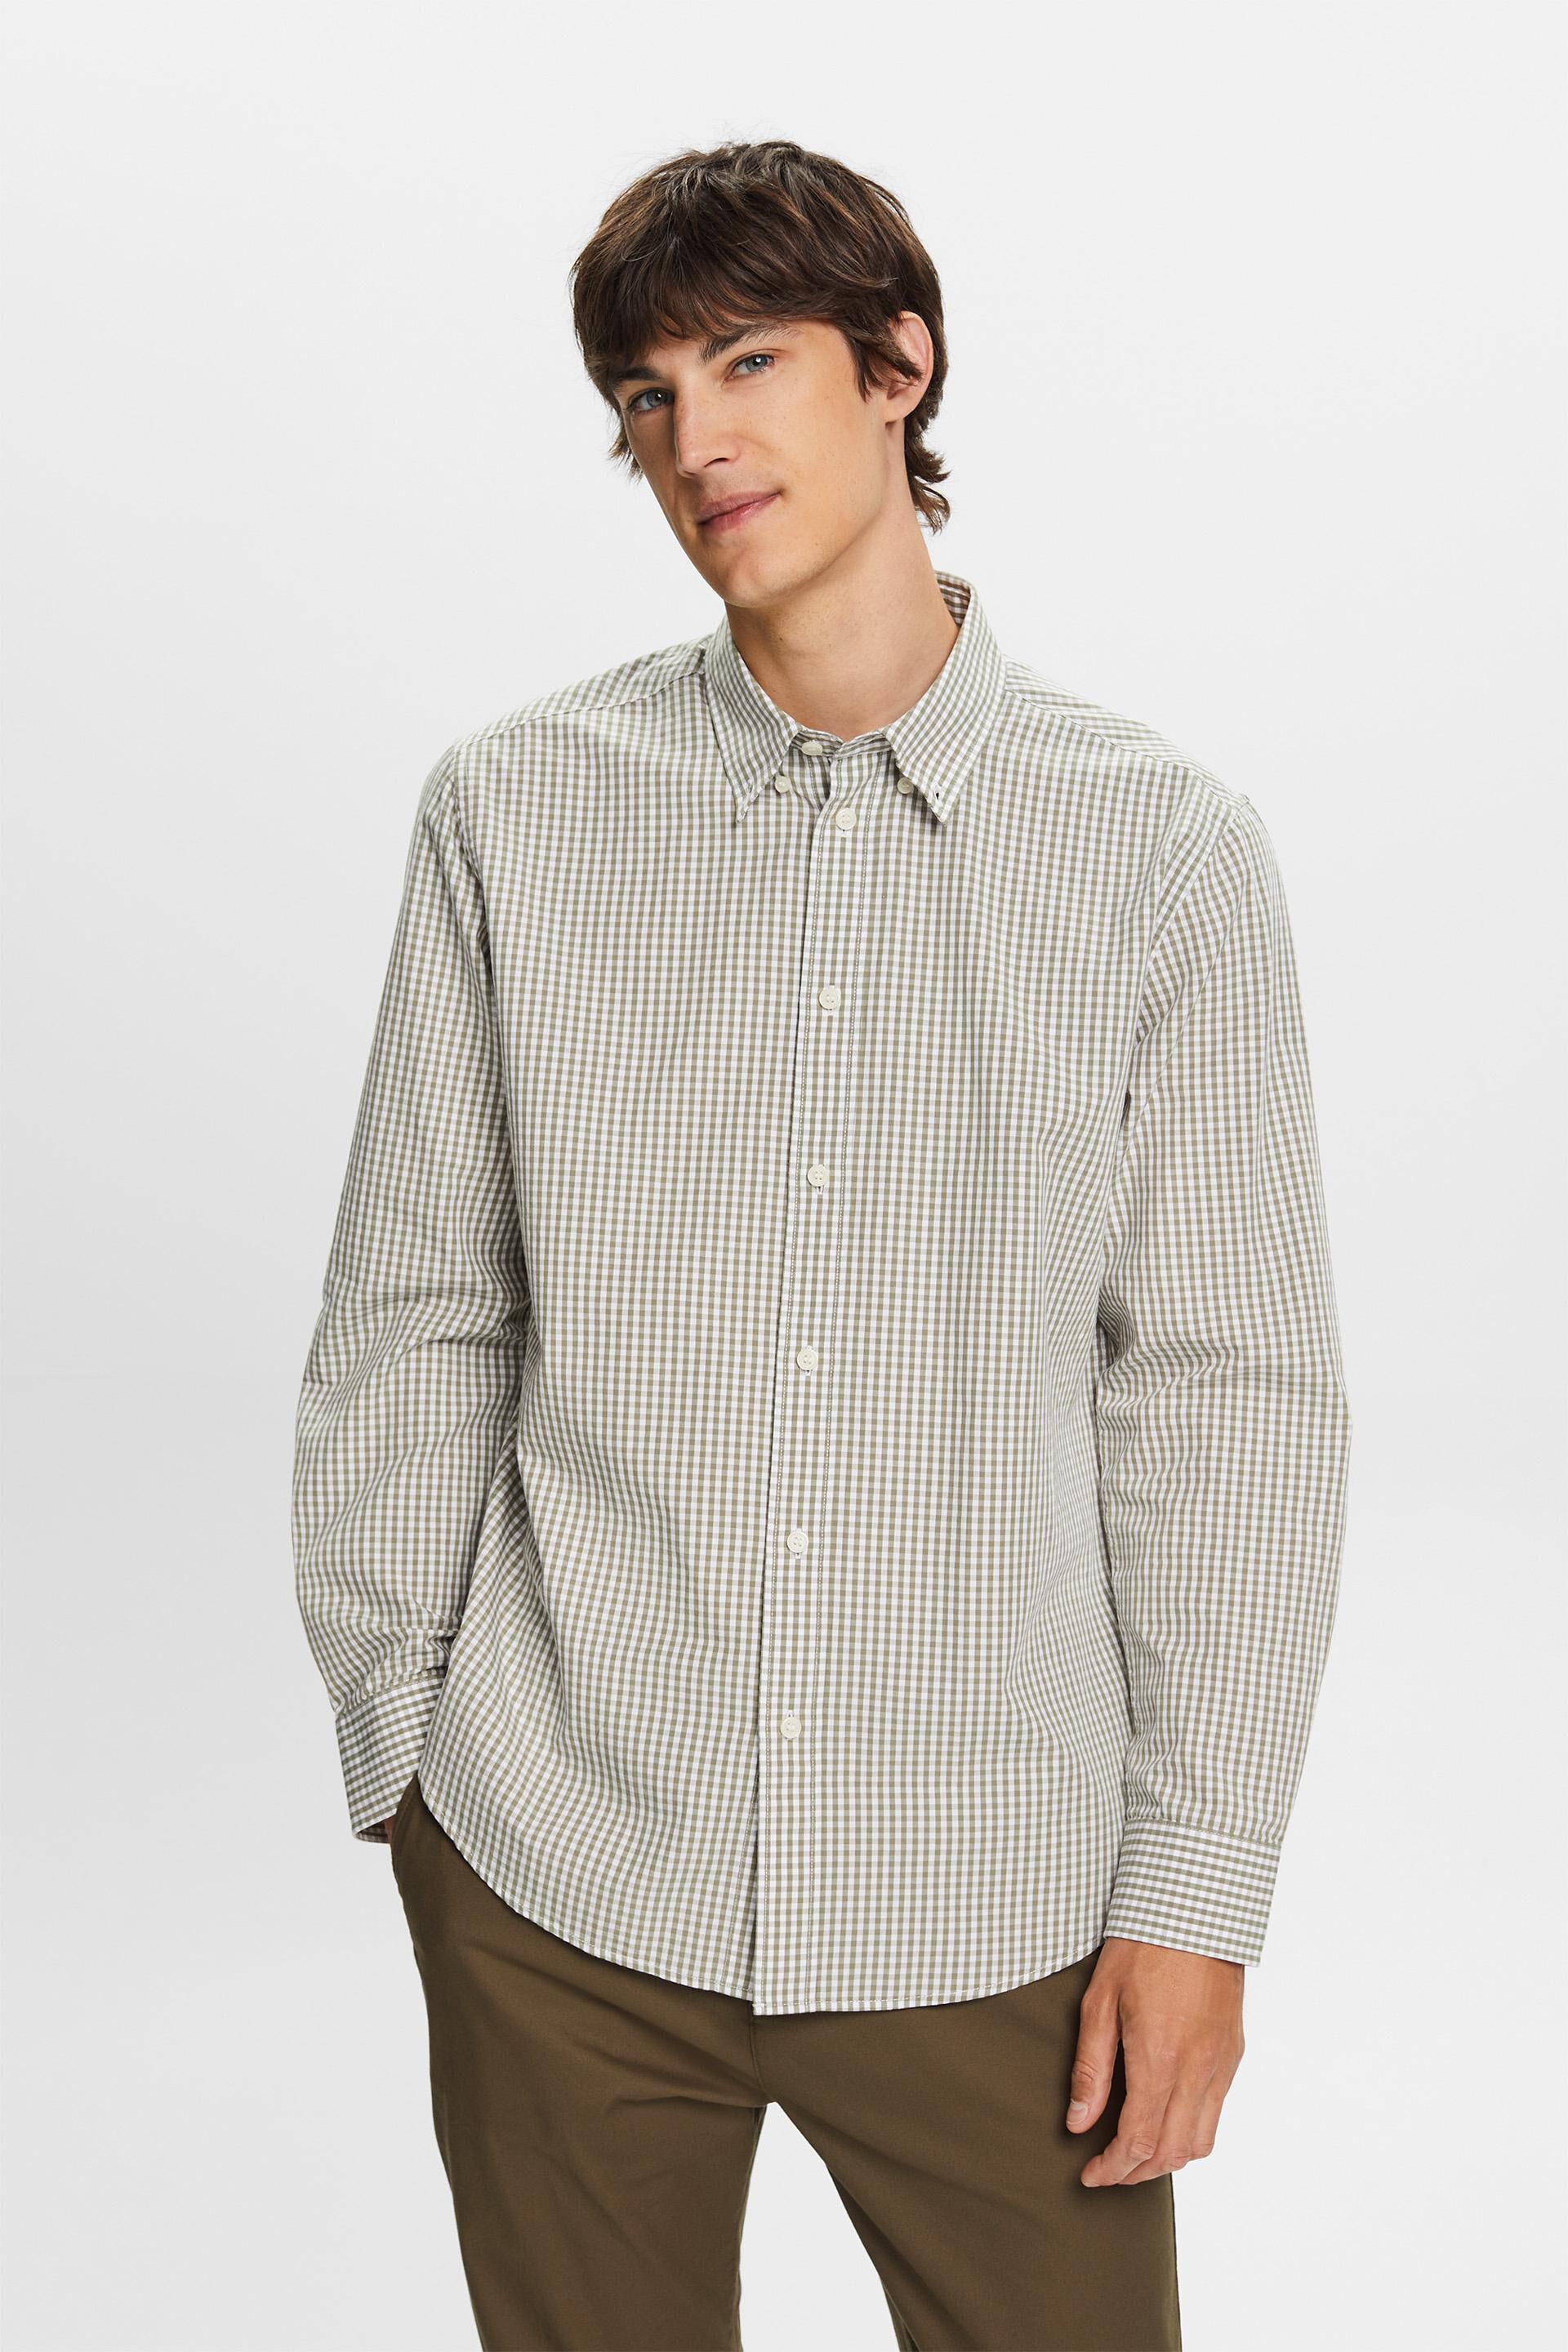 Esprit cotton 100% button-down shirt, Vichy